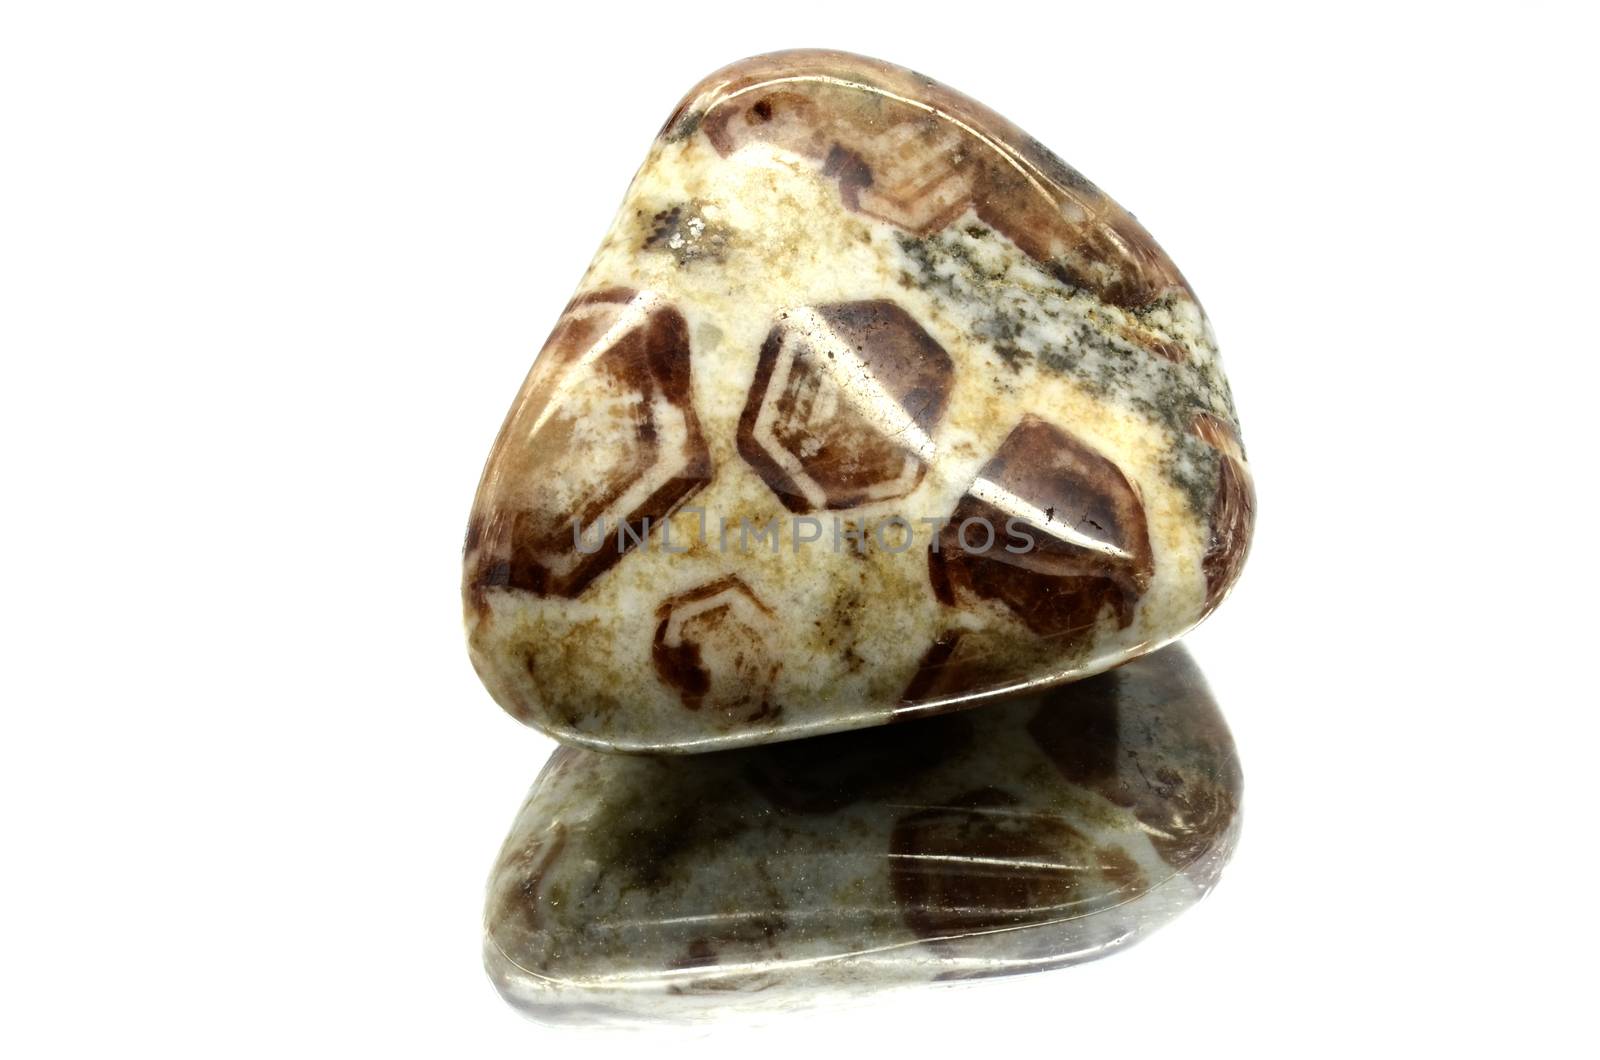 Sample of a beautiful tumbled Limestone Garnet semiprecious stones isolated on white